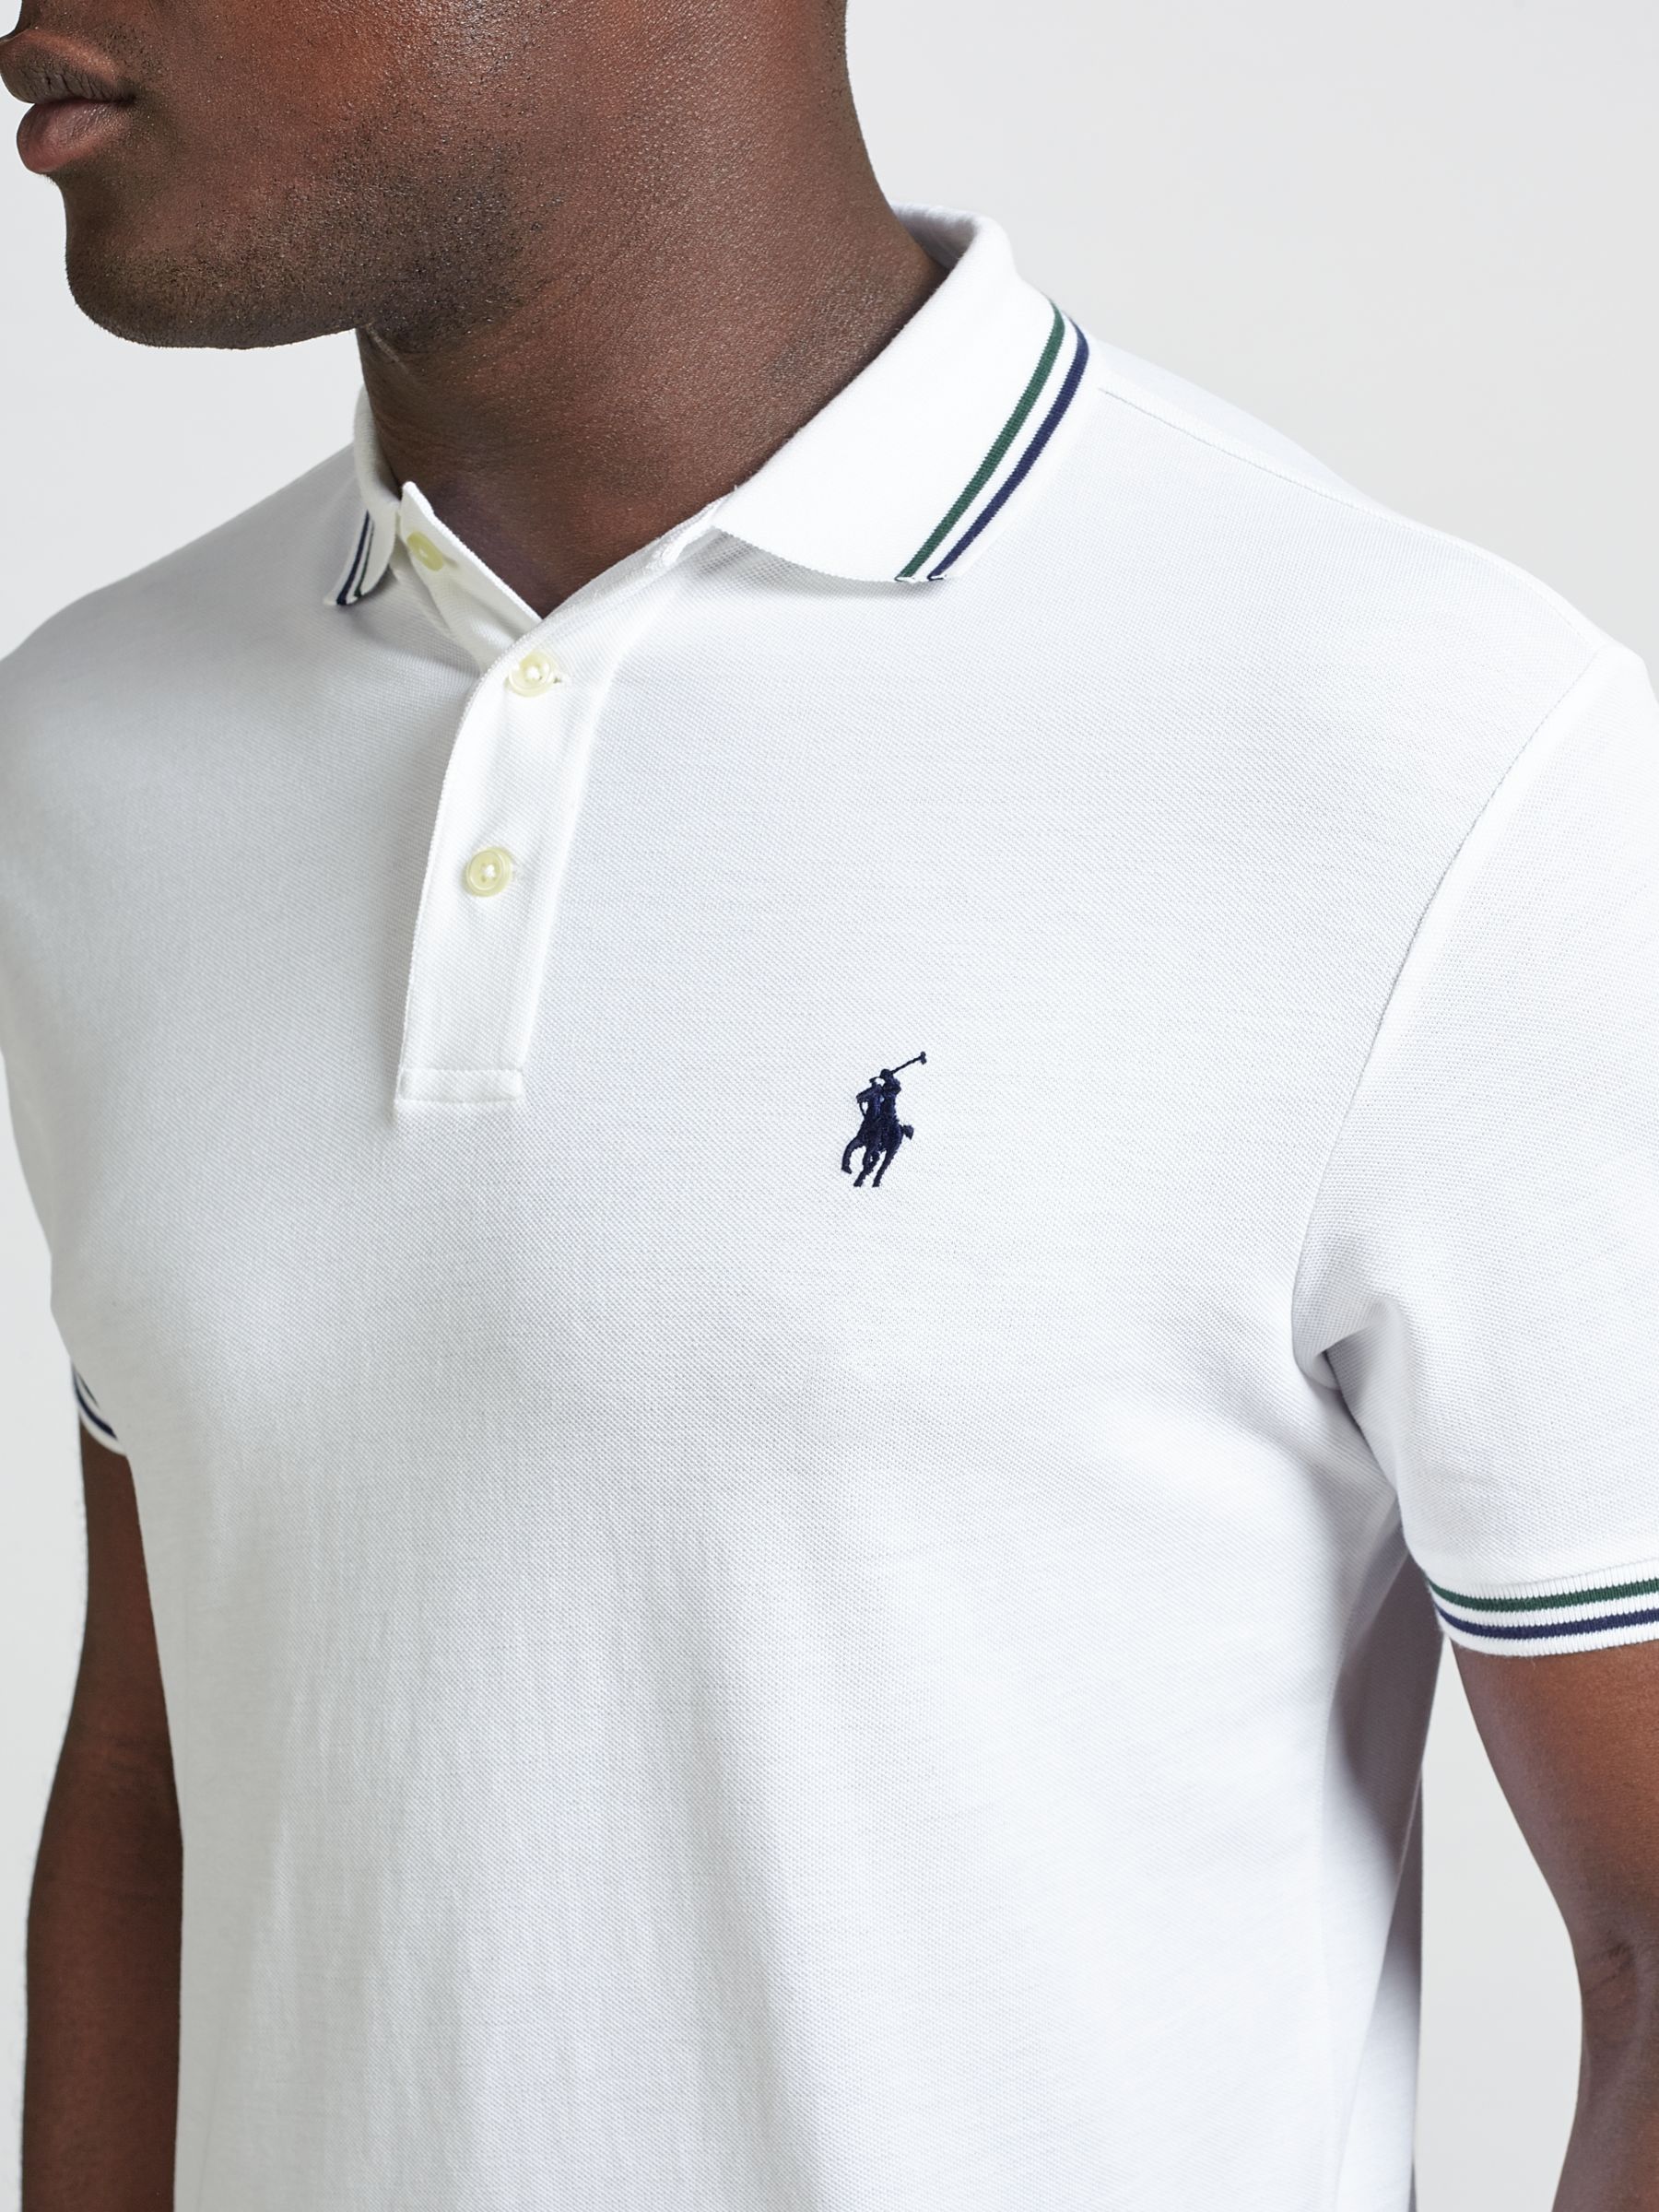 Polo Ralph Lauren Wimbledon Polo Shirt at John Lewis & Partners